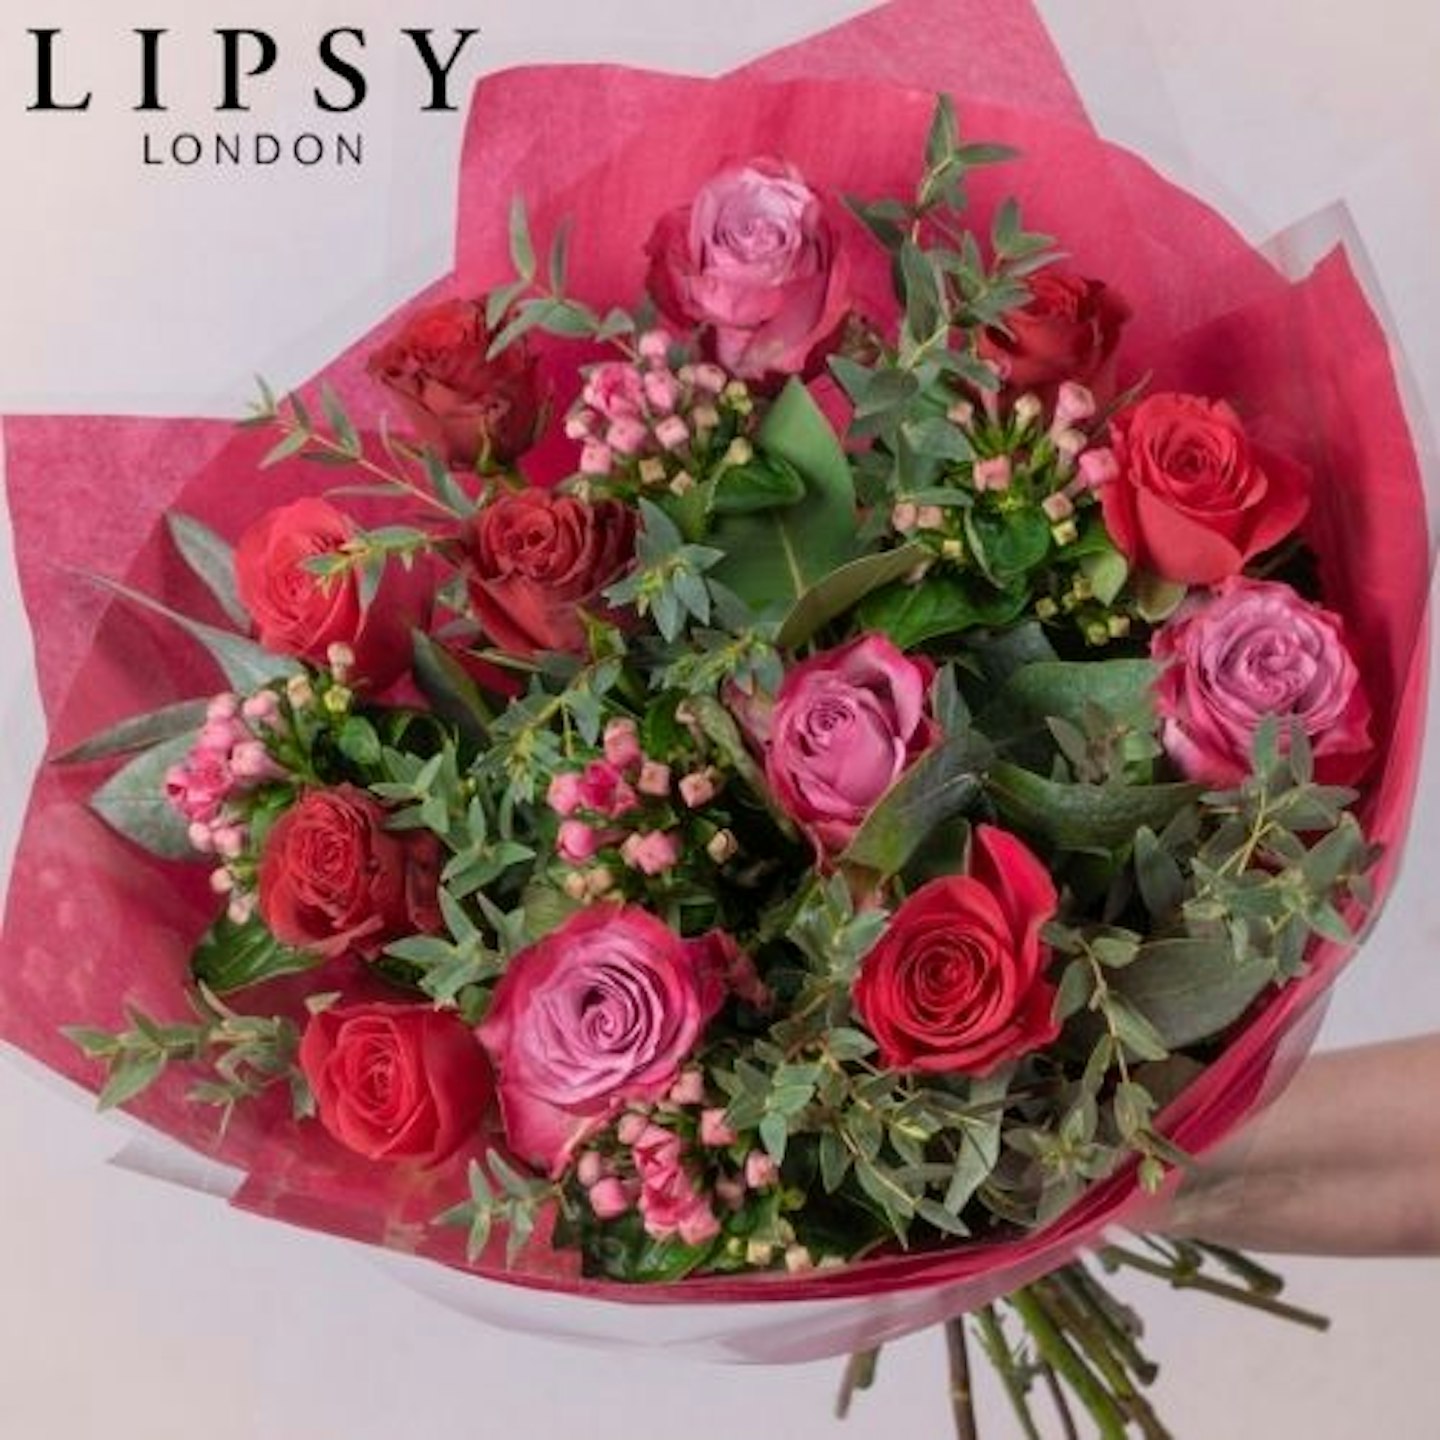 Lipsy Valentines Bouquet